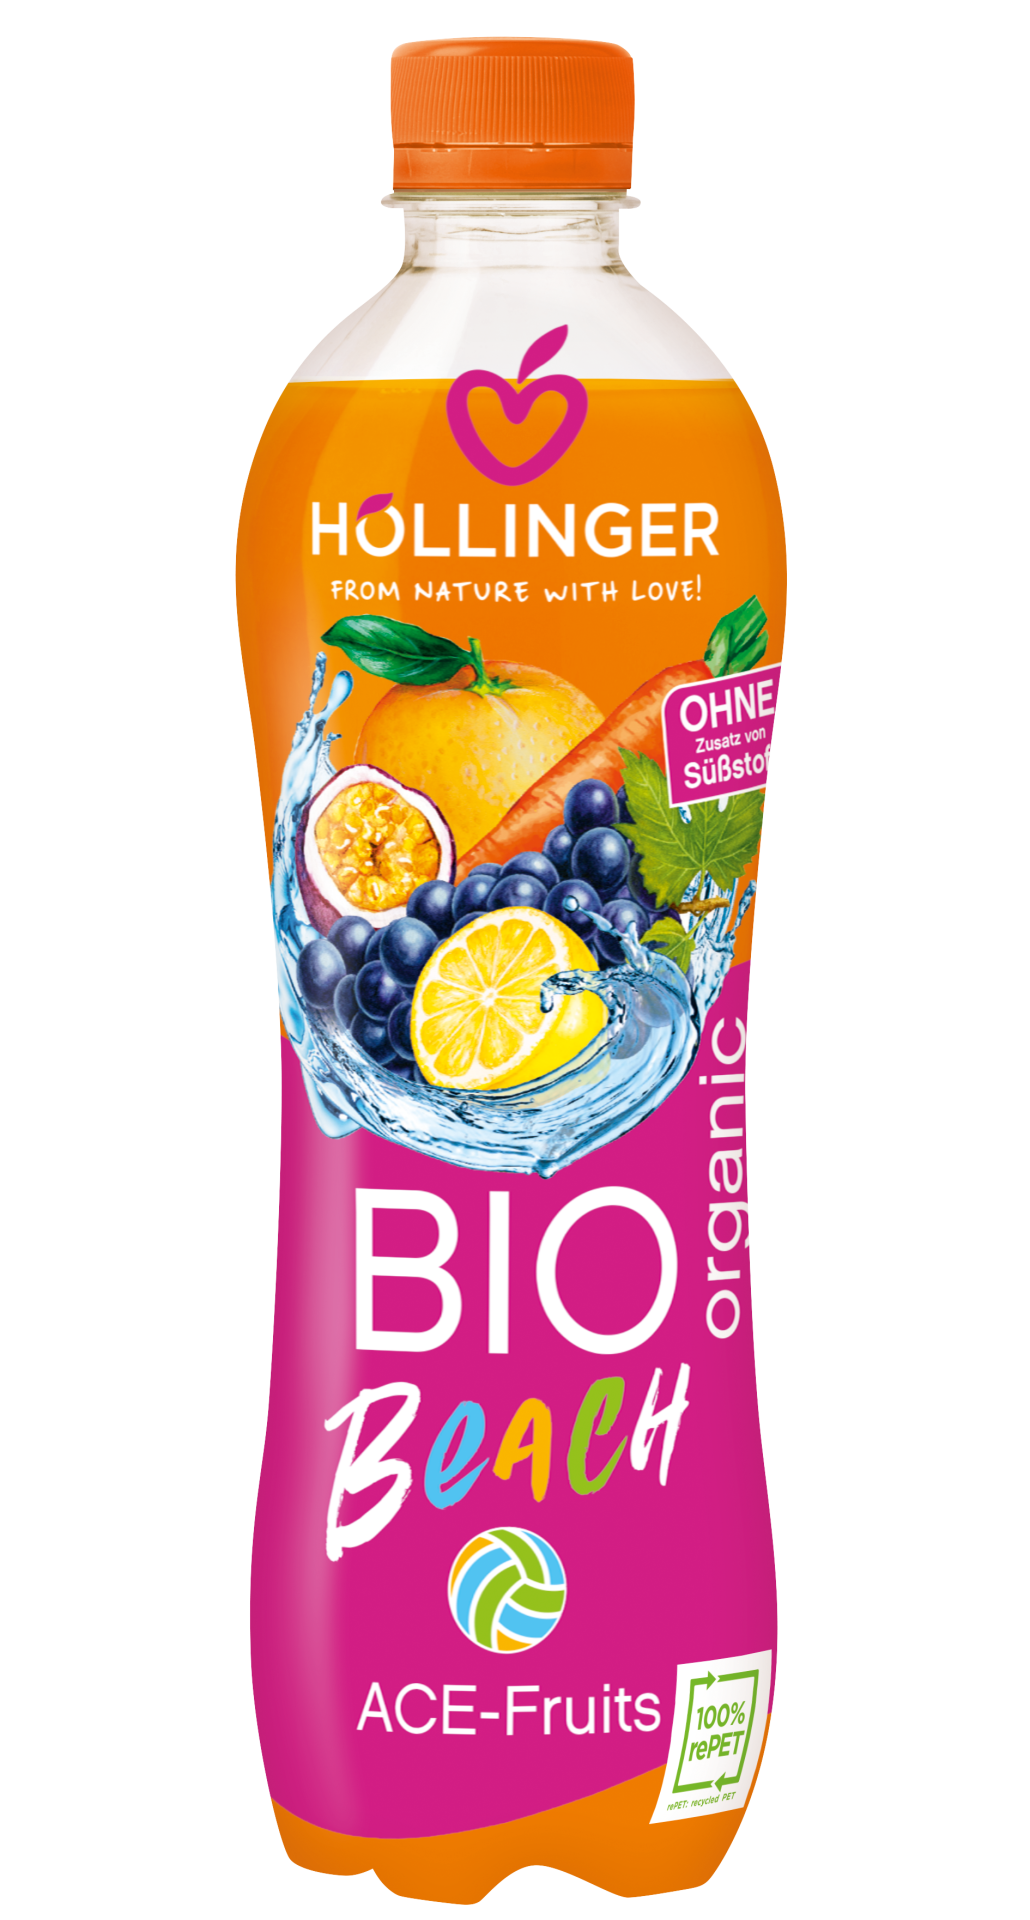 Höllinger Bio Beach ACE Fruits